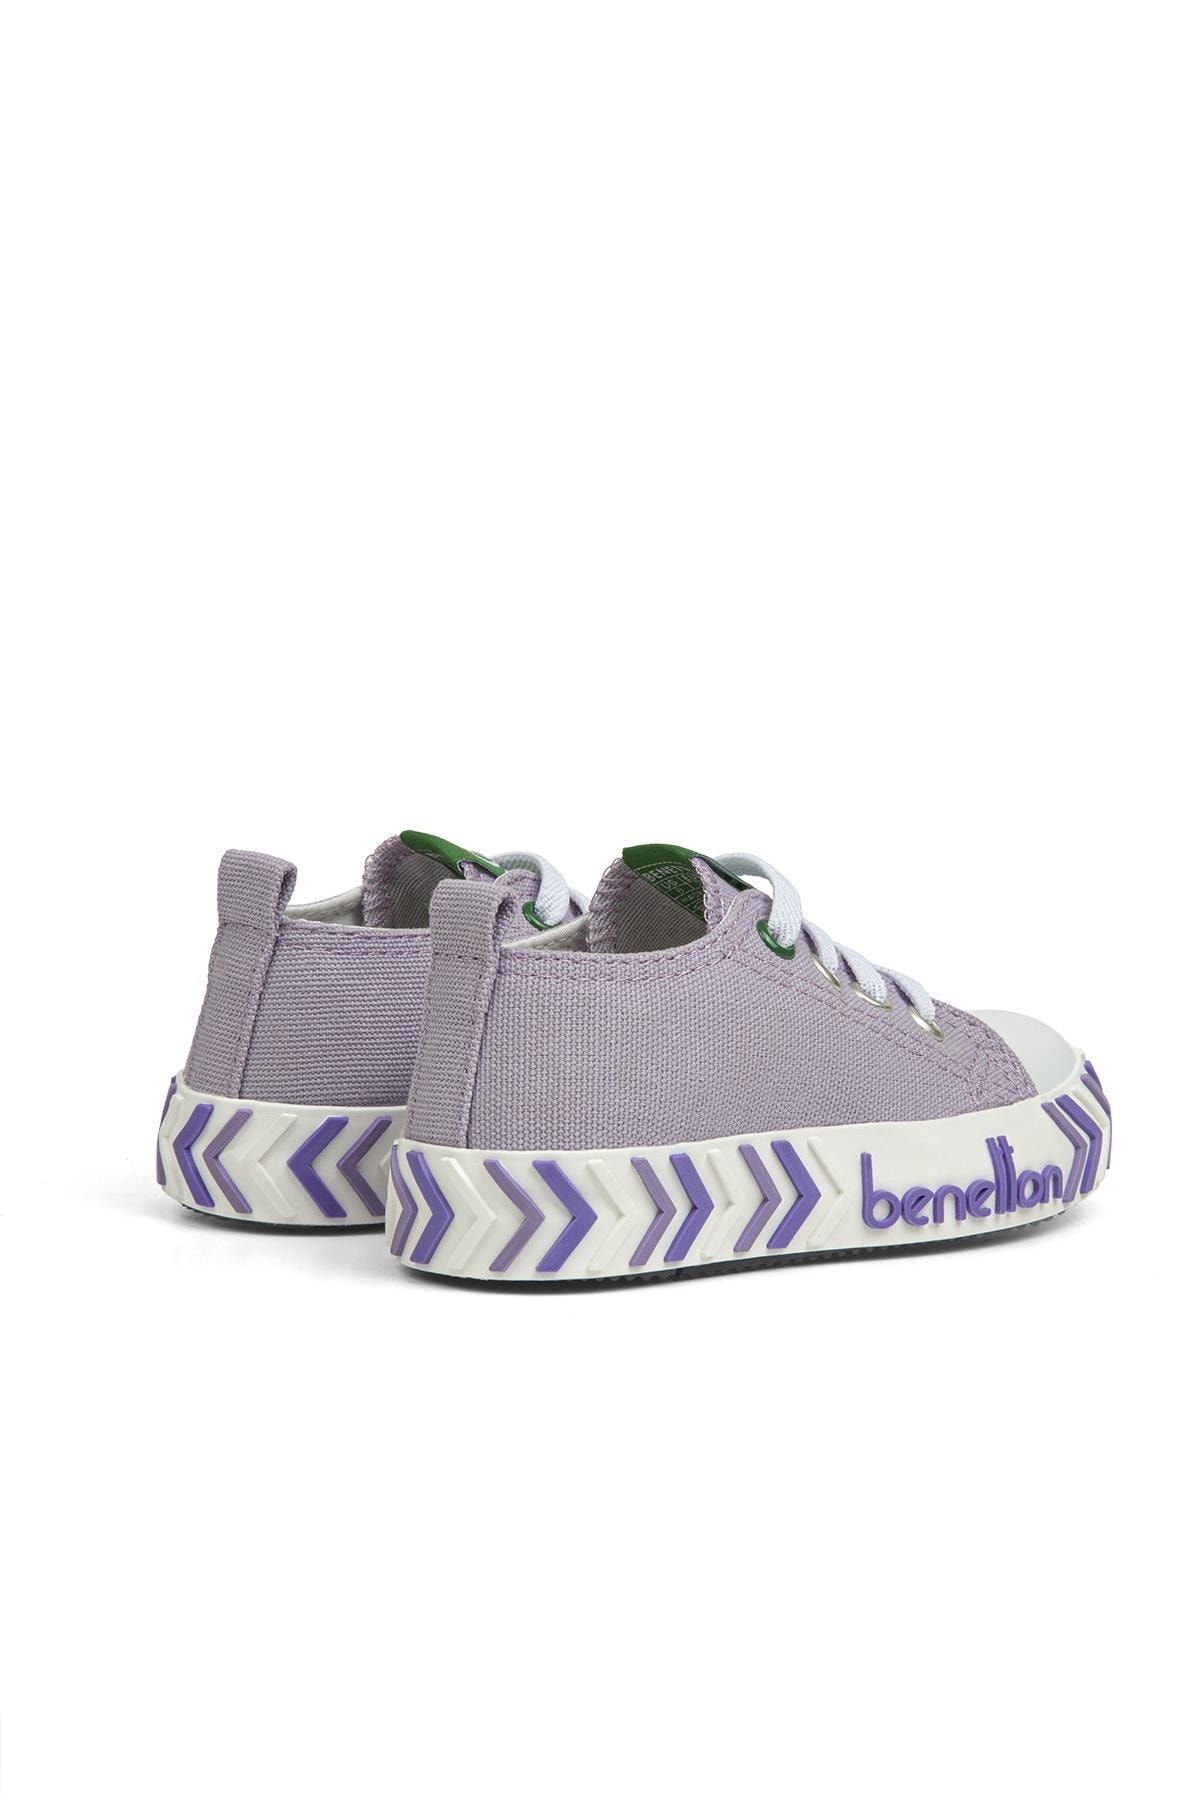 Benetton ® | Bn-30640 - 3394 Lilac Kids کفش ورزشیs